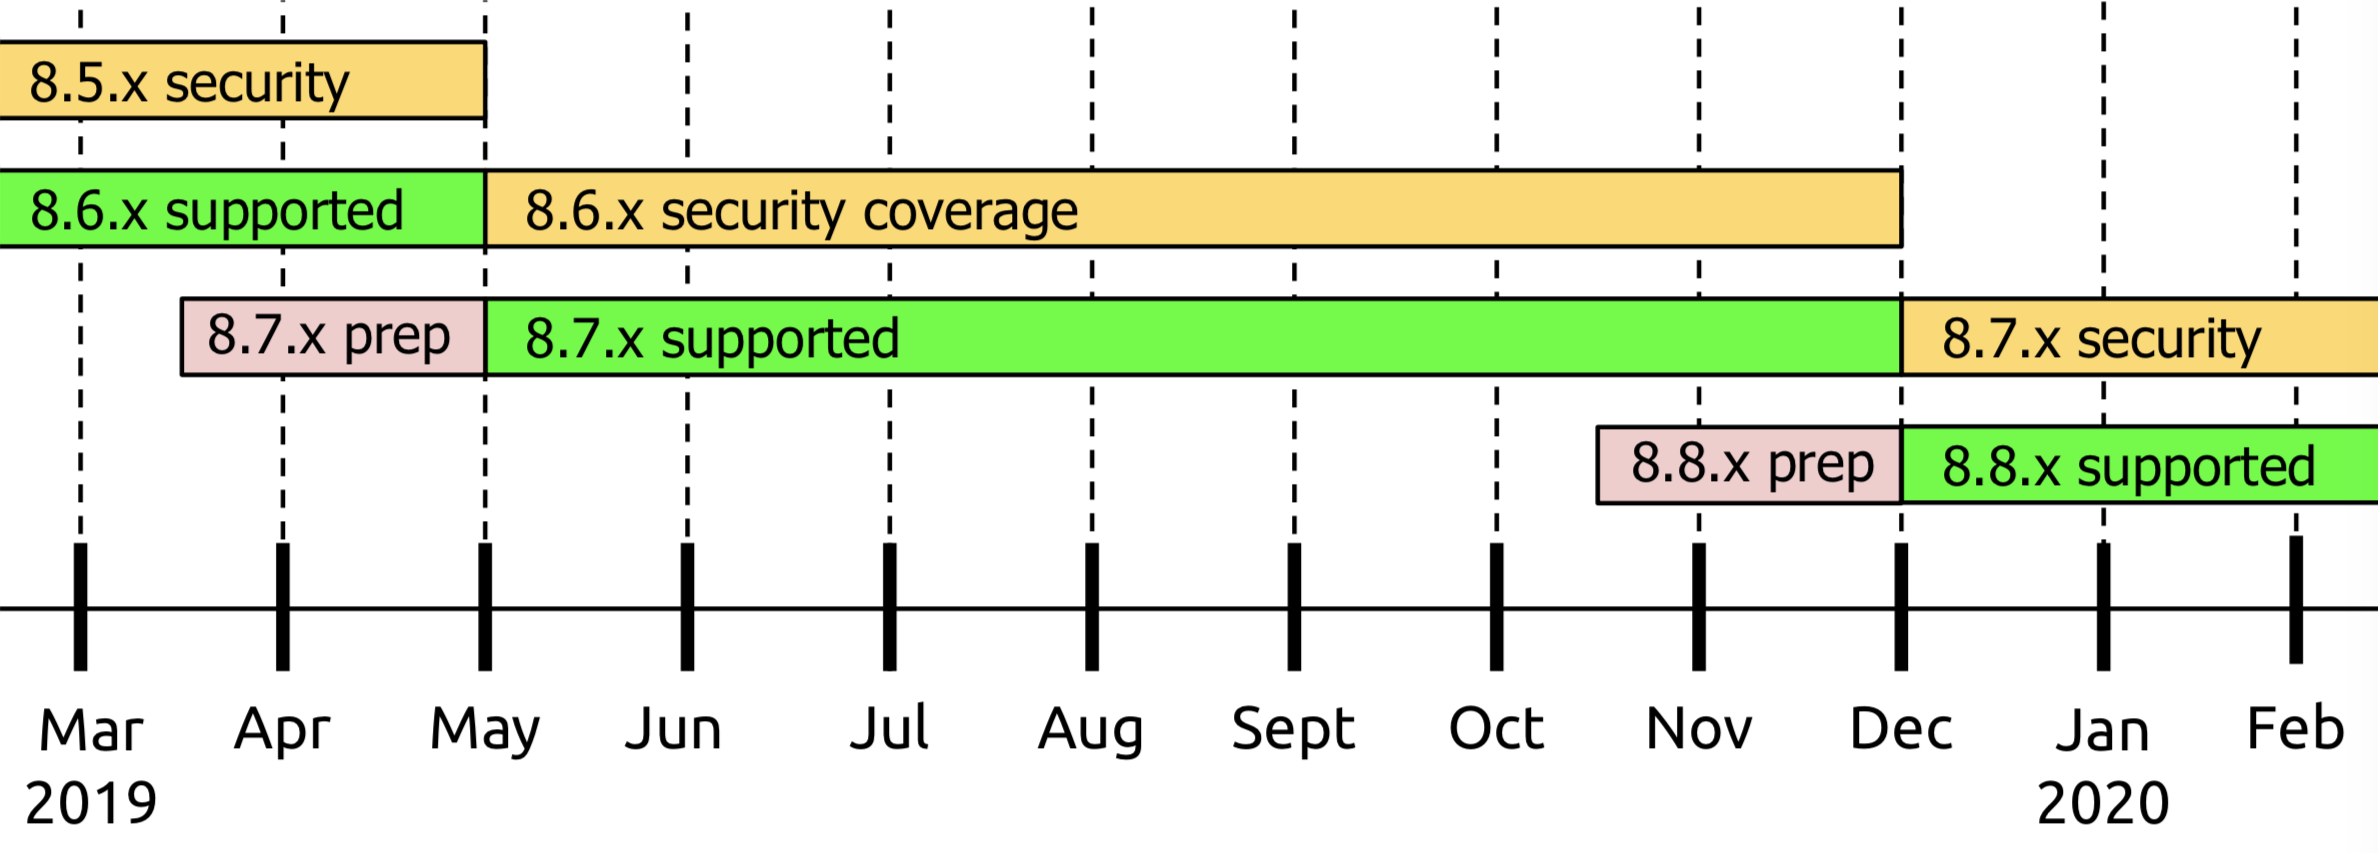 Release Schedule Image Gantt Chart for Drupal